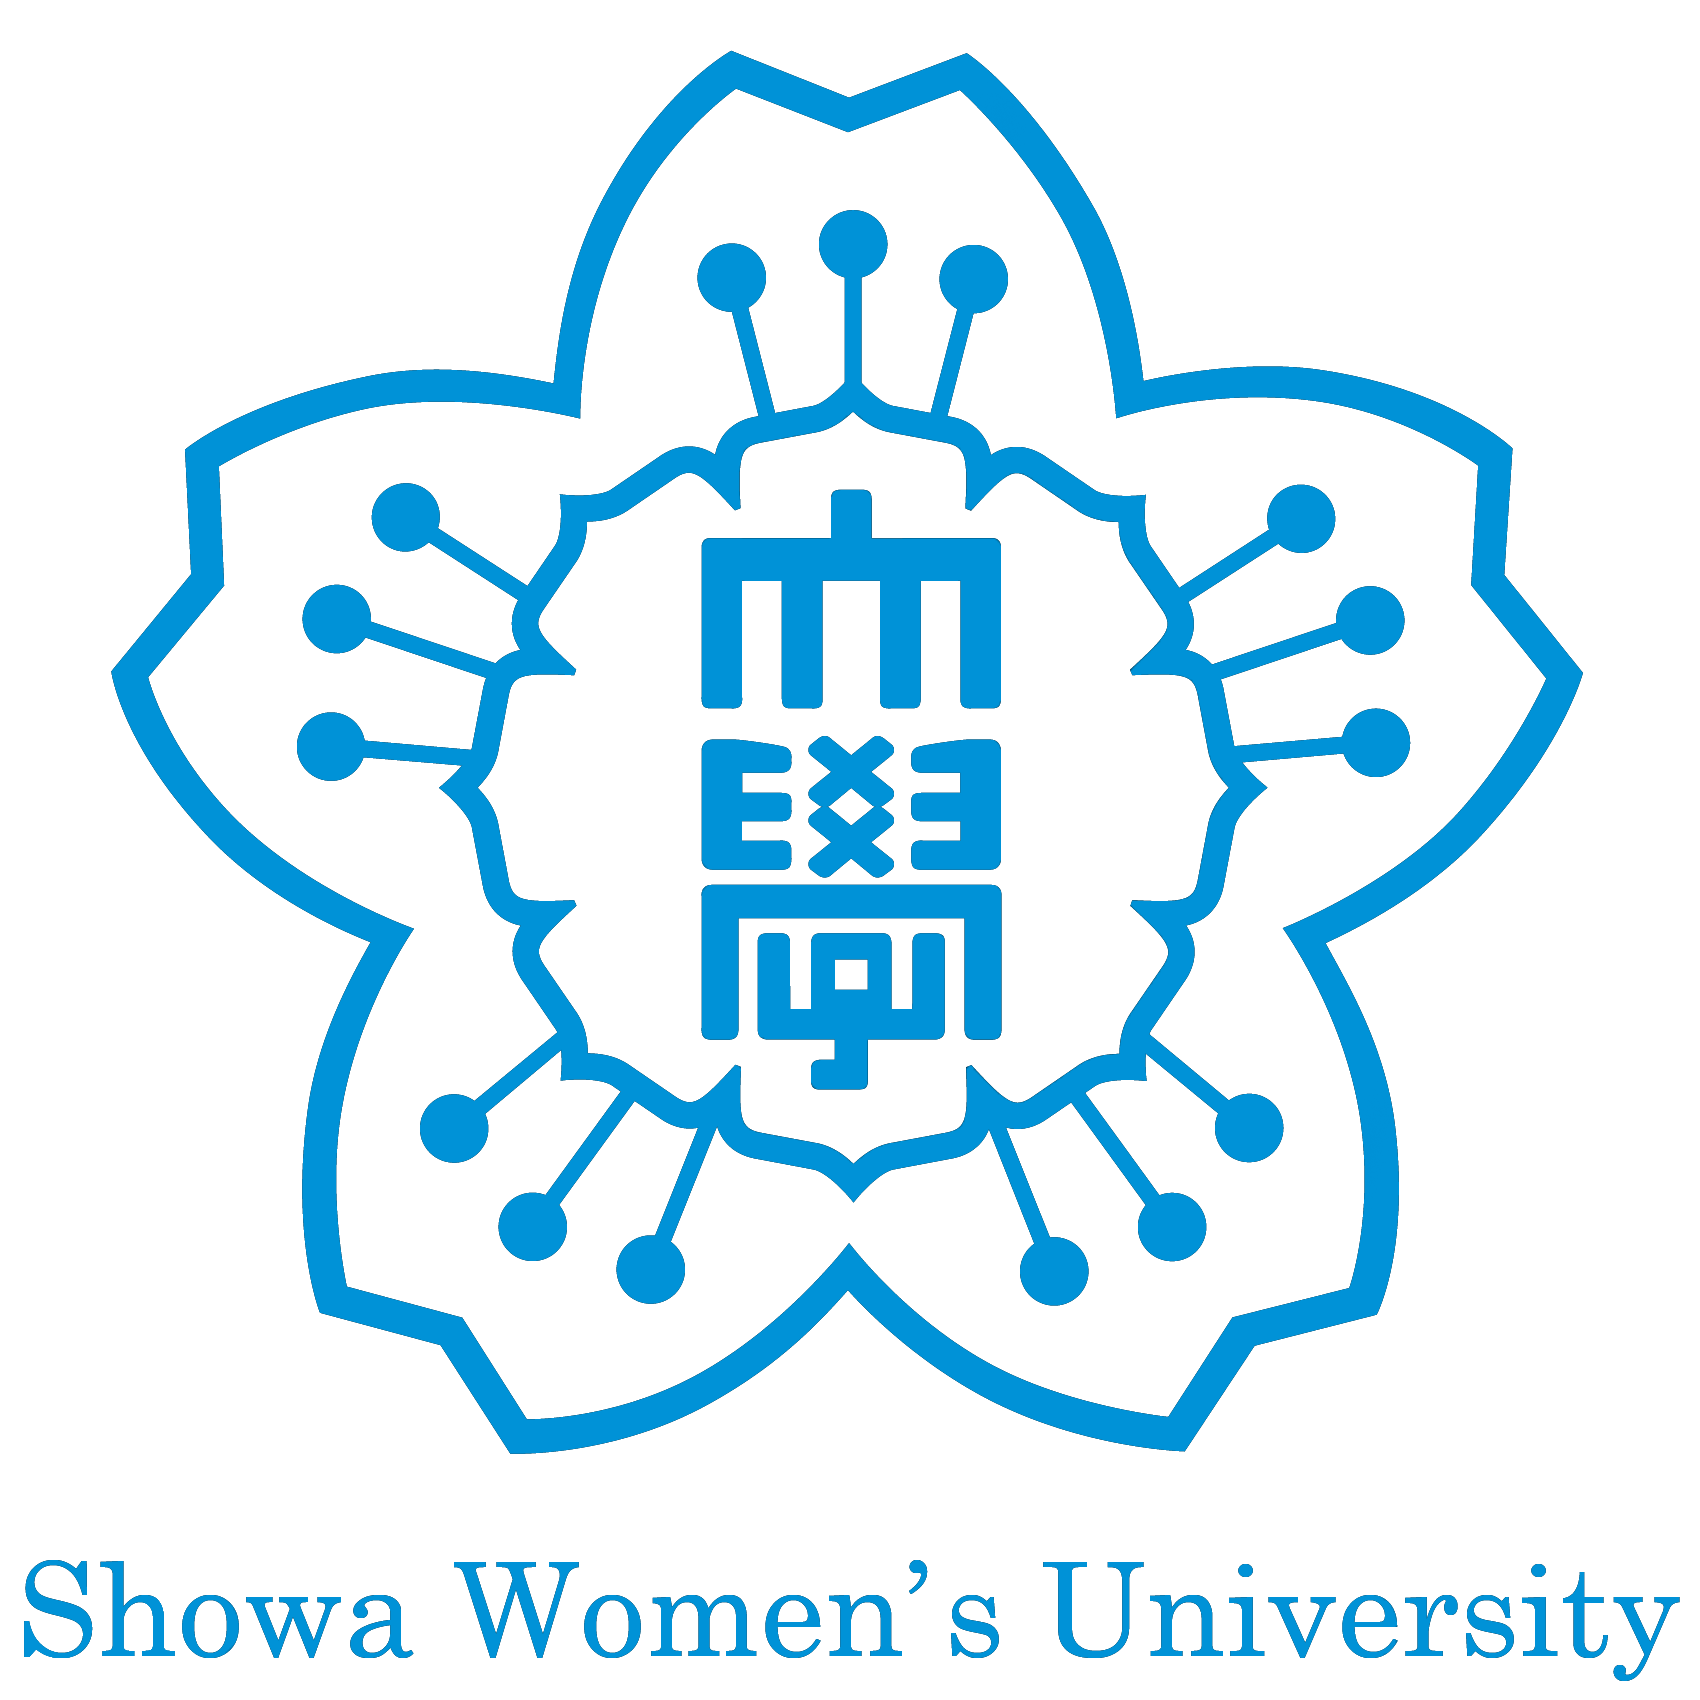 Showa Women's University Japan